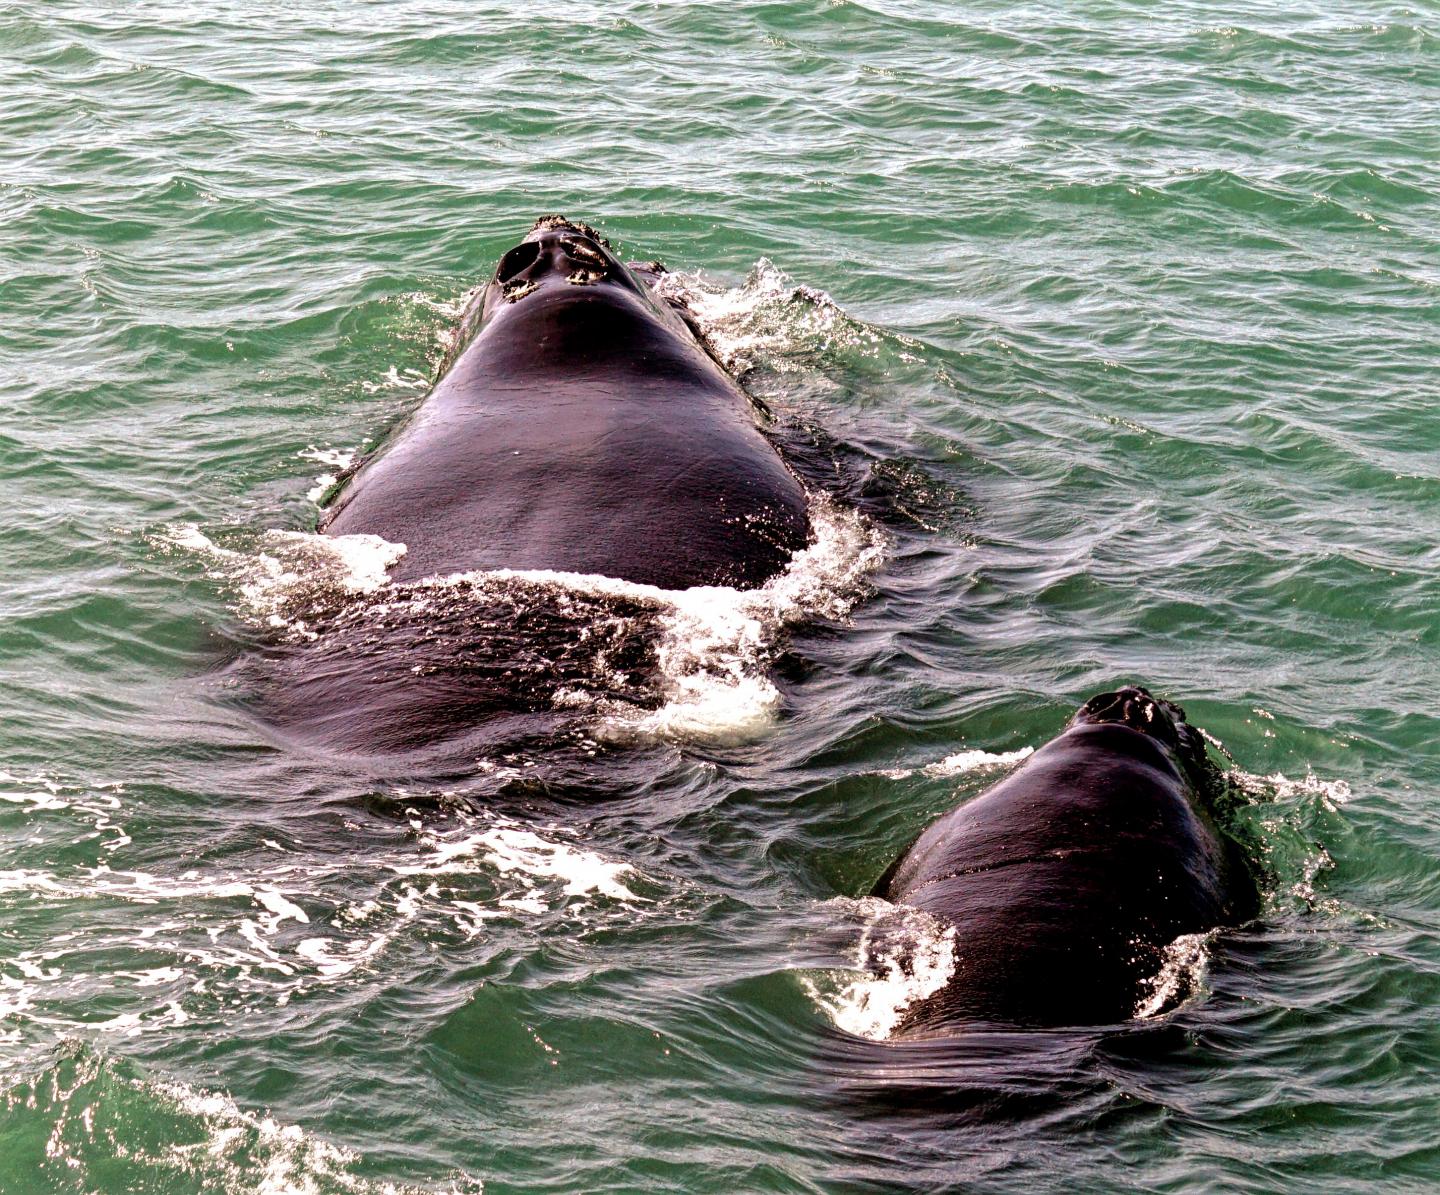 Mutation Complicates Whale Vision